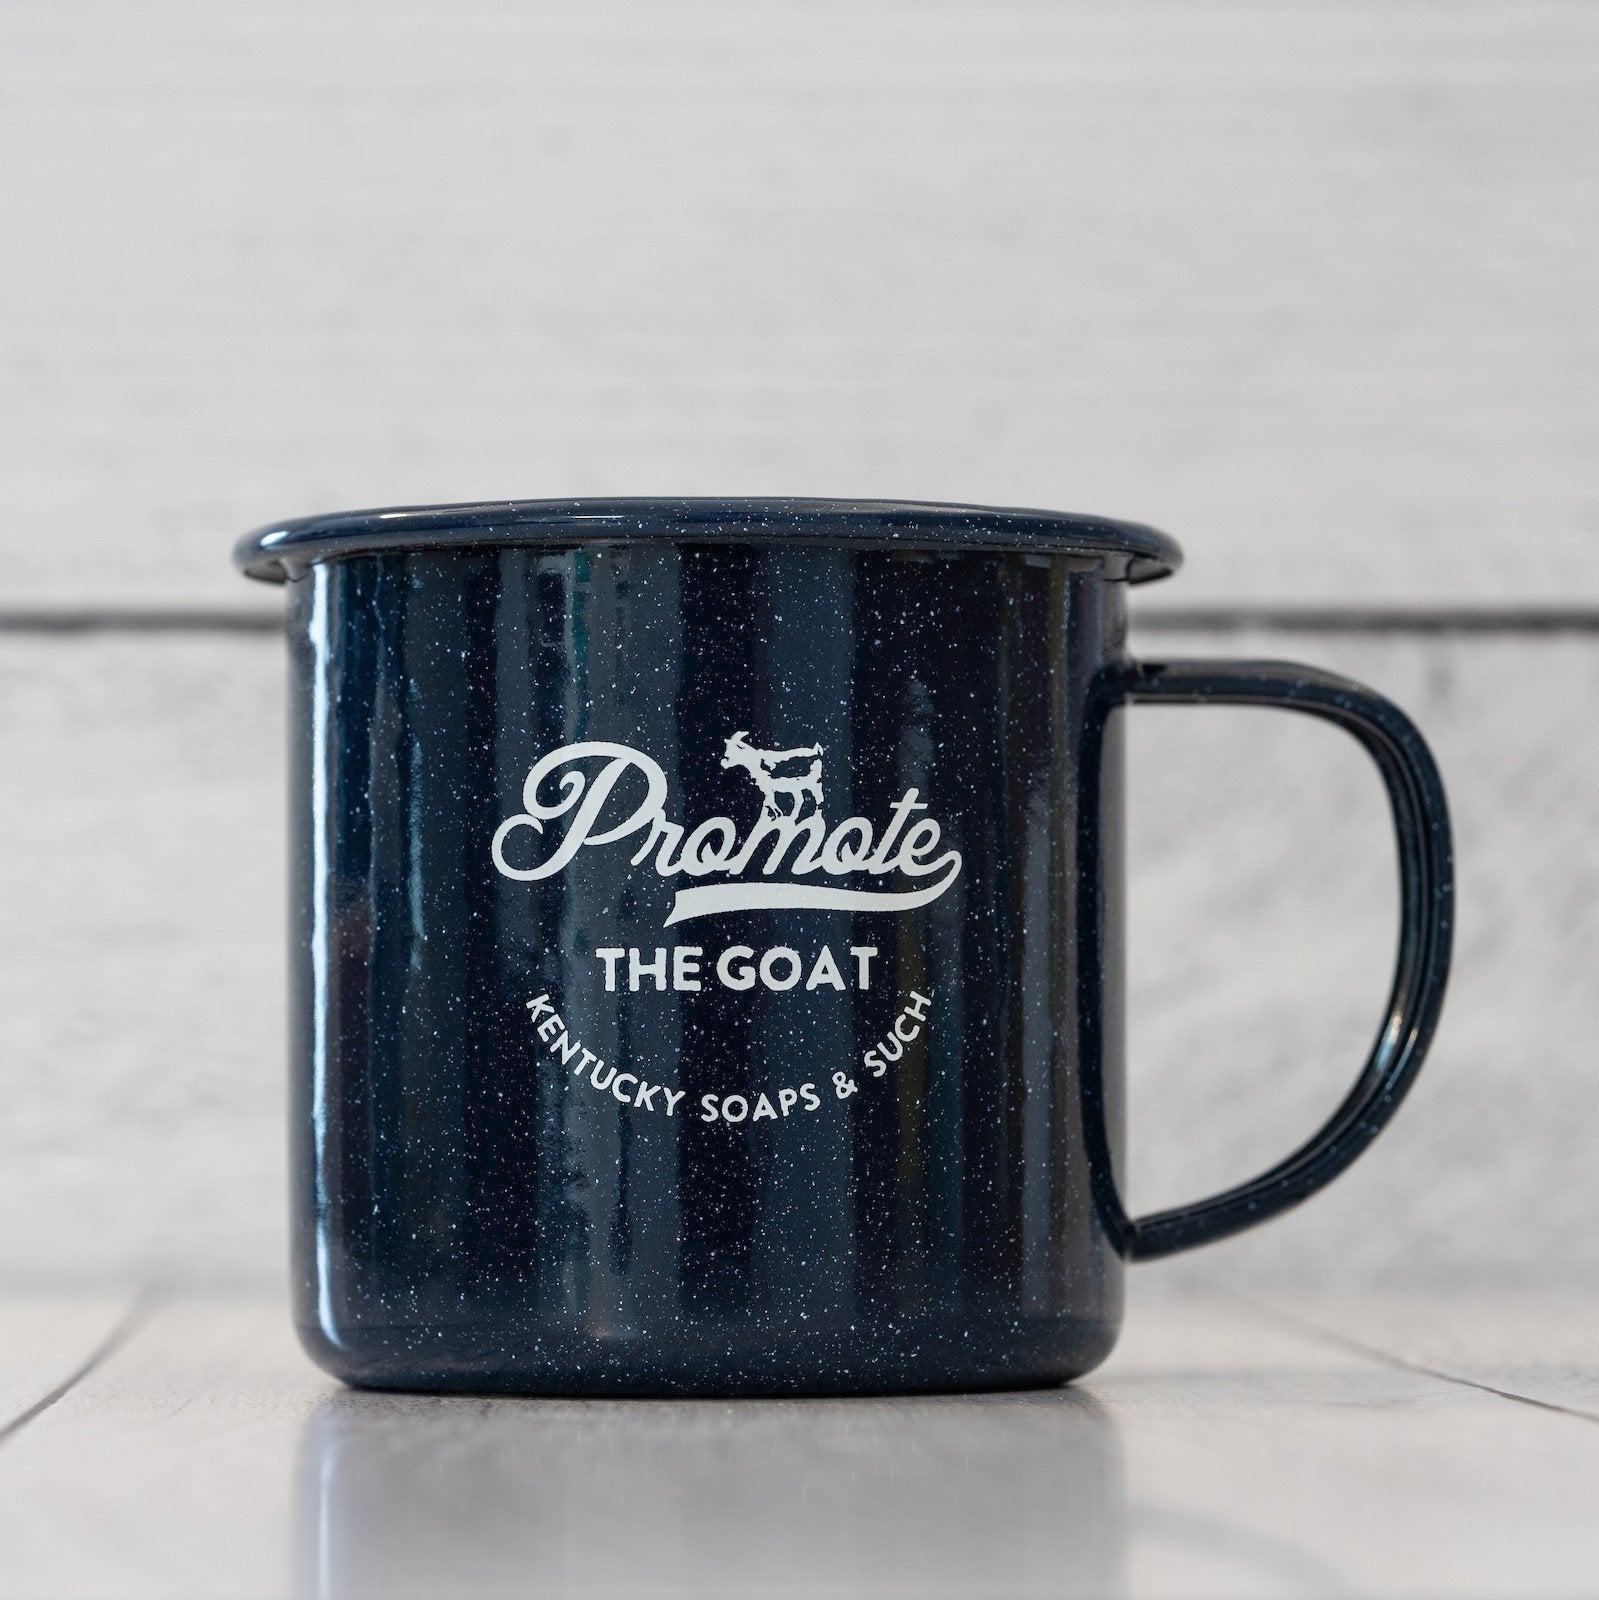 Promote the Goat Enamel Mug - Kentucky Soaps & Such